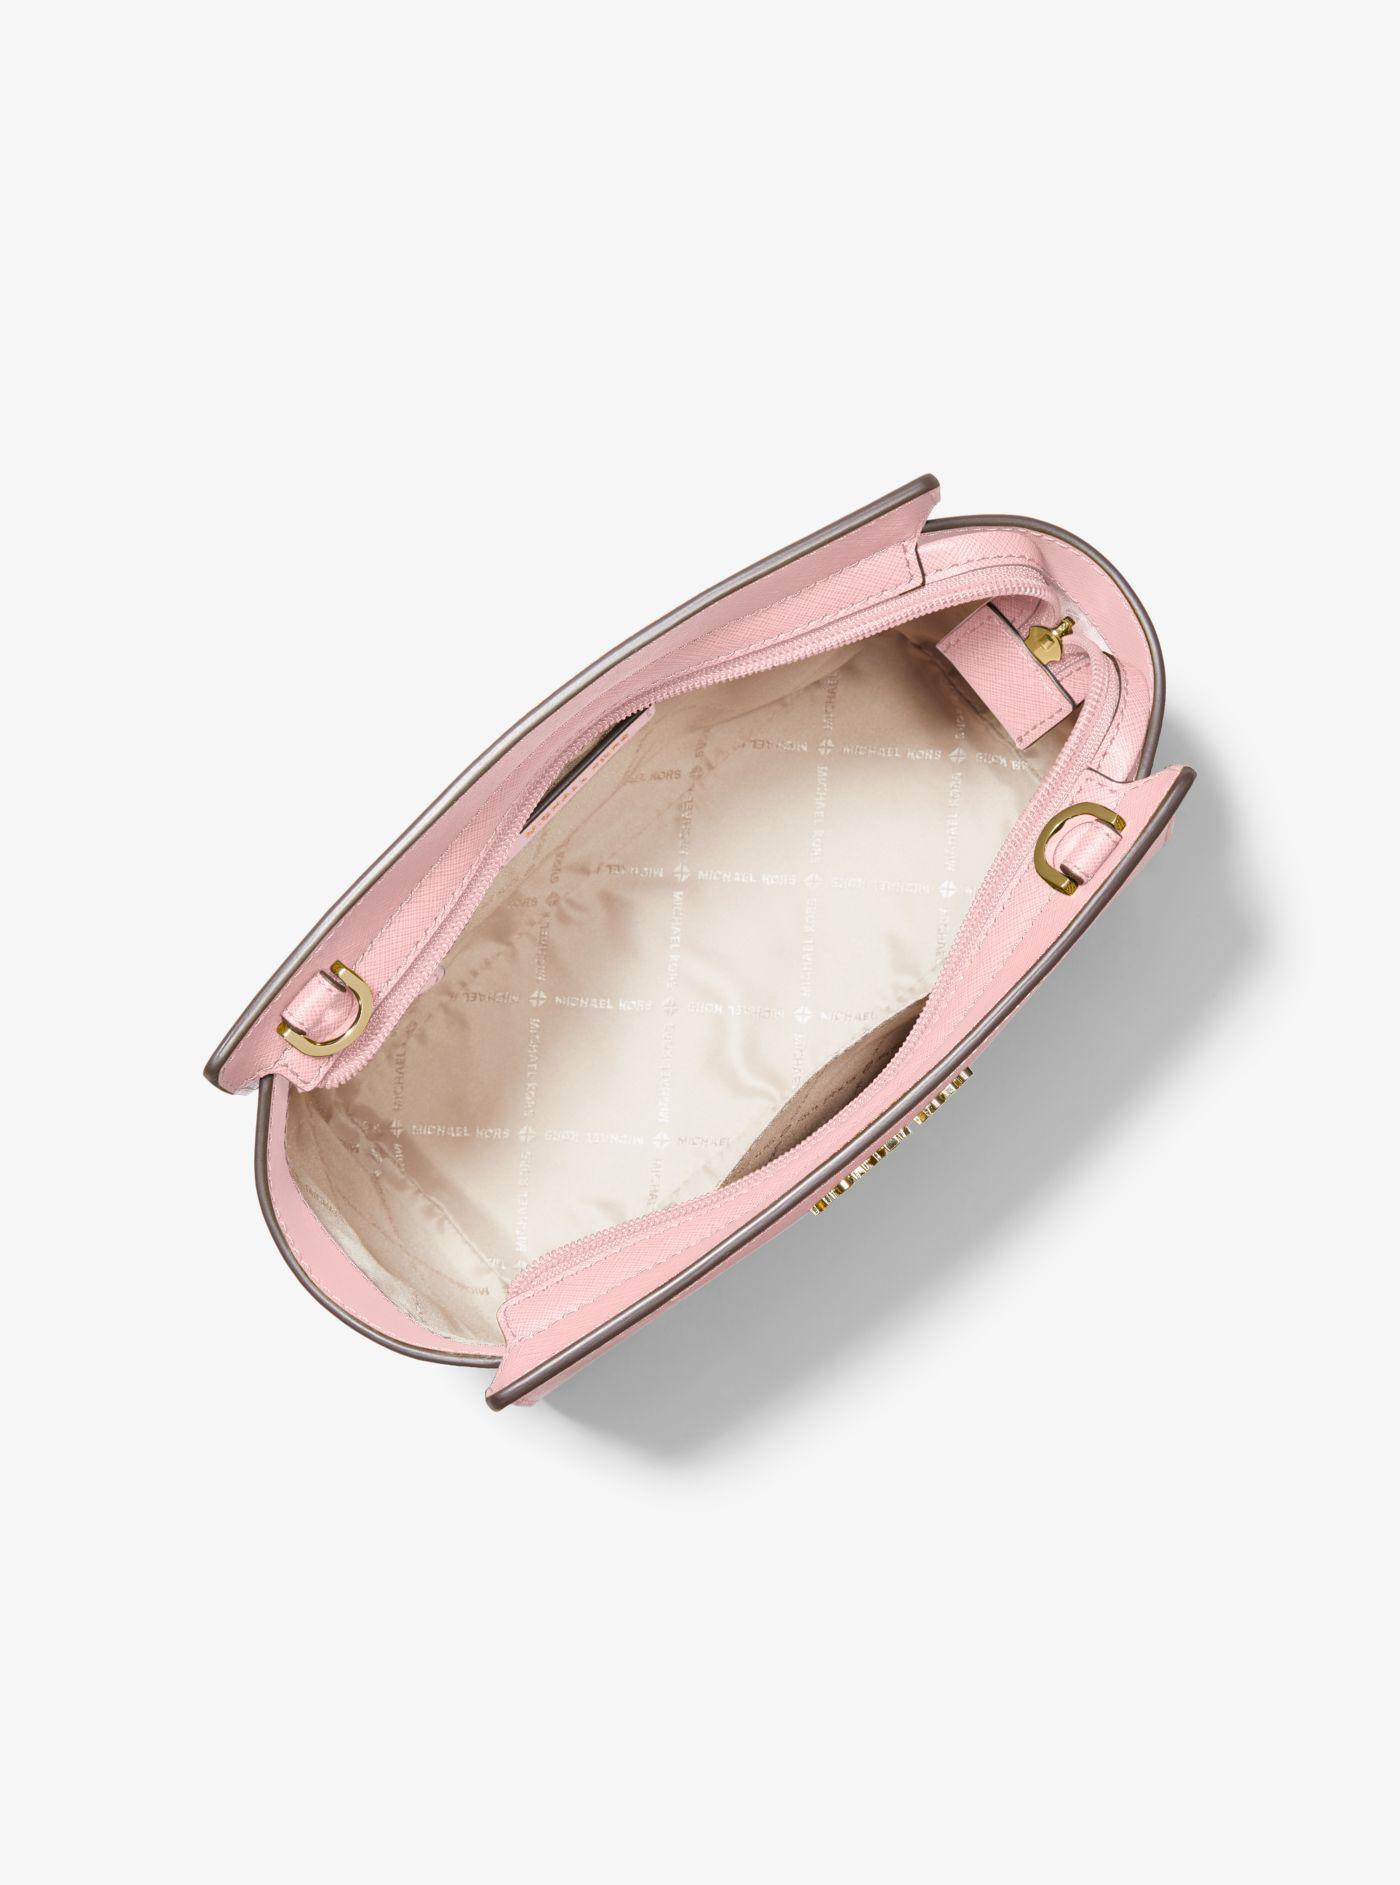 Michael Kors Selma Medium Saffiano Leather Crossbody Bag in Pink | Lyst